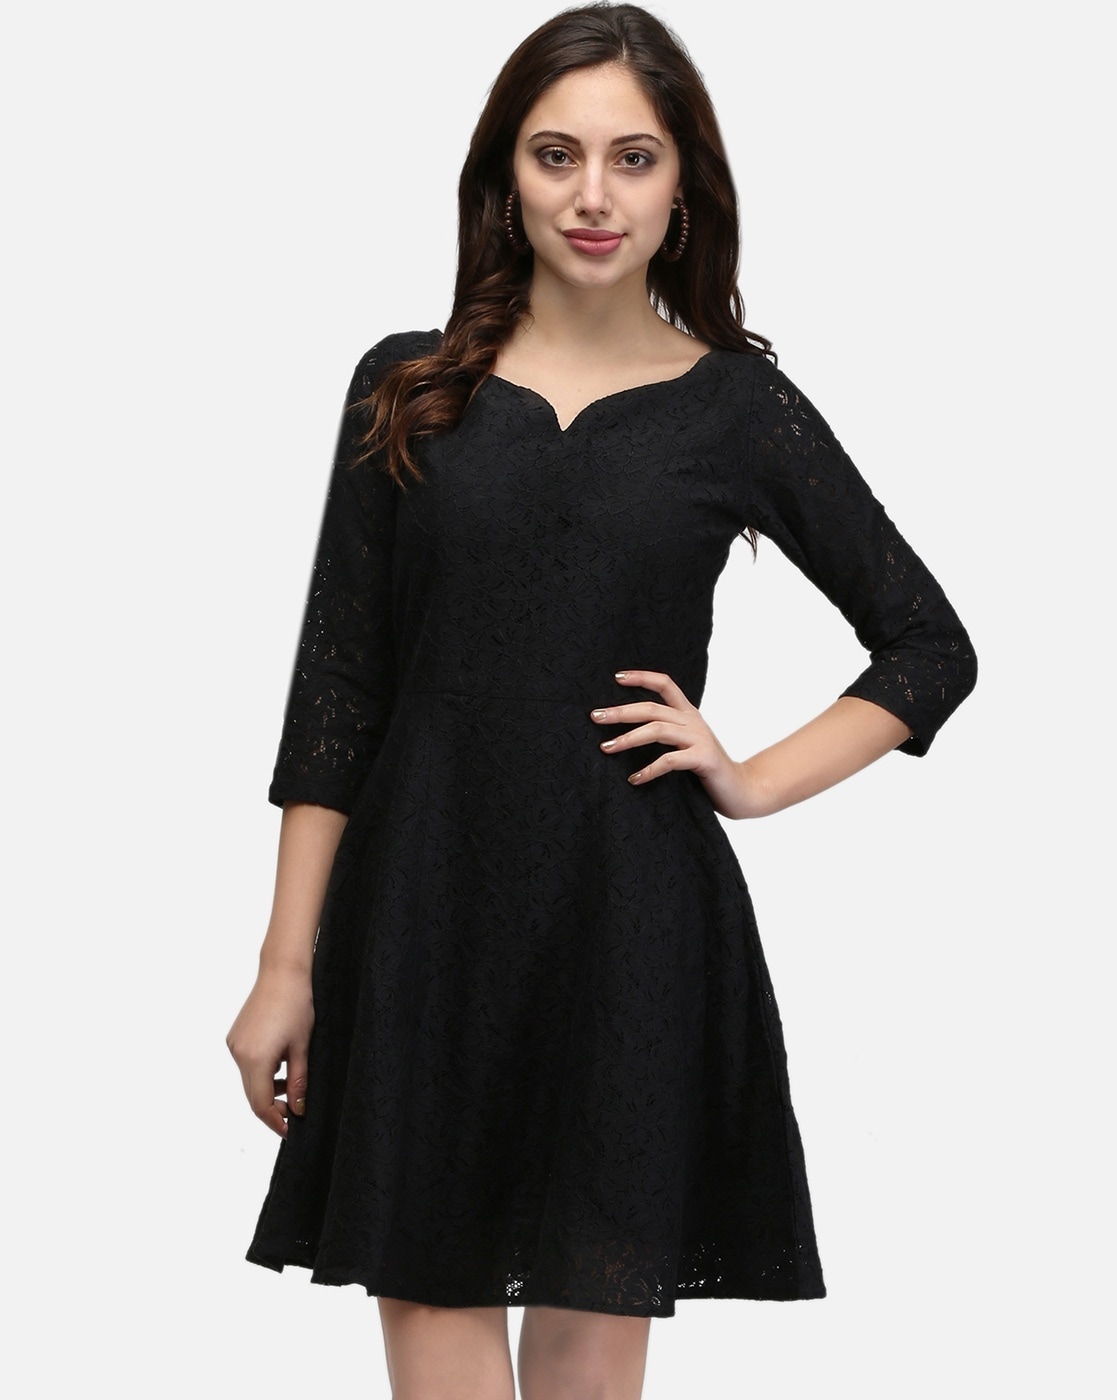 net #dress #neck #designs Black net dress | Mode india, Pakaian fashion,  Gaun fashion